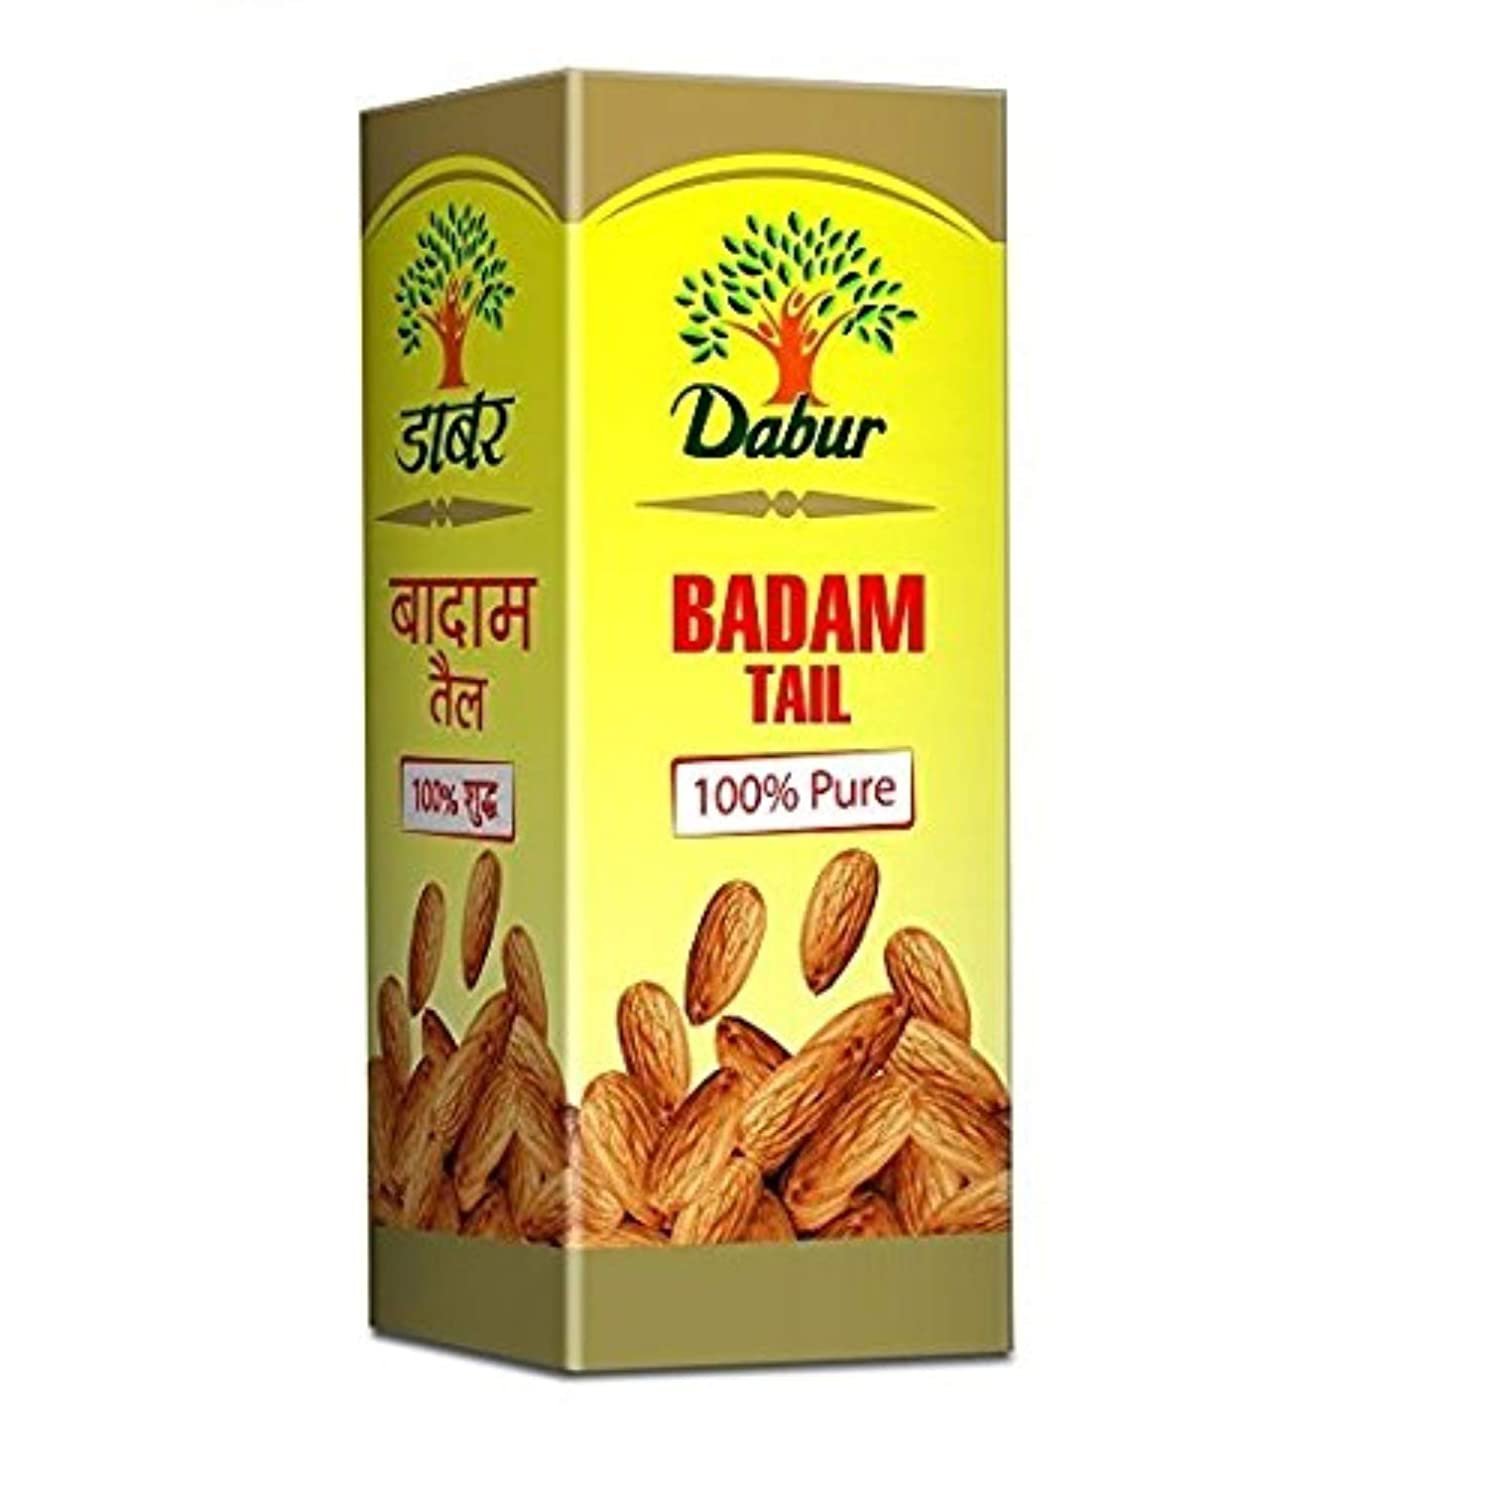 Almond Oil from Dabur